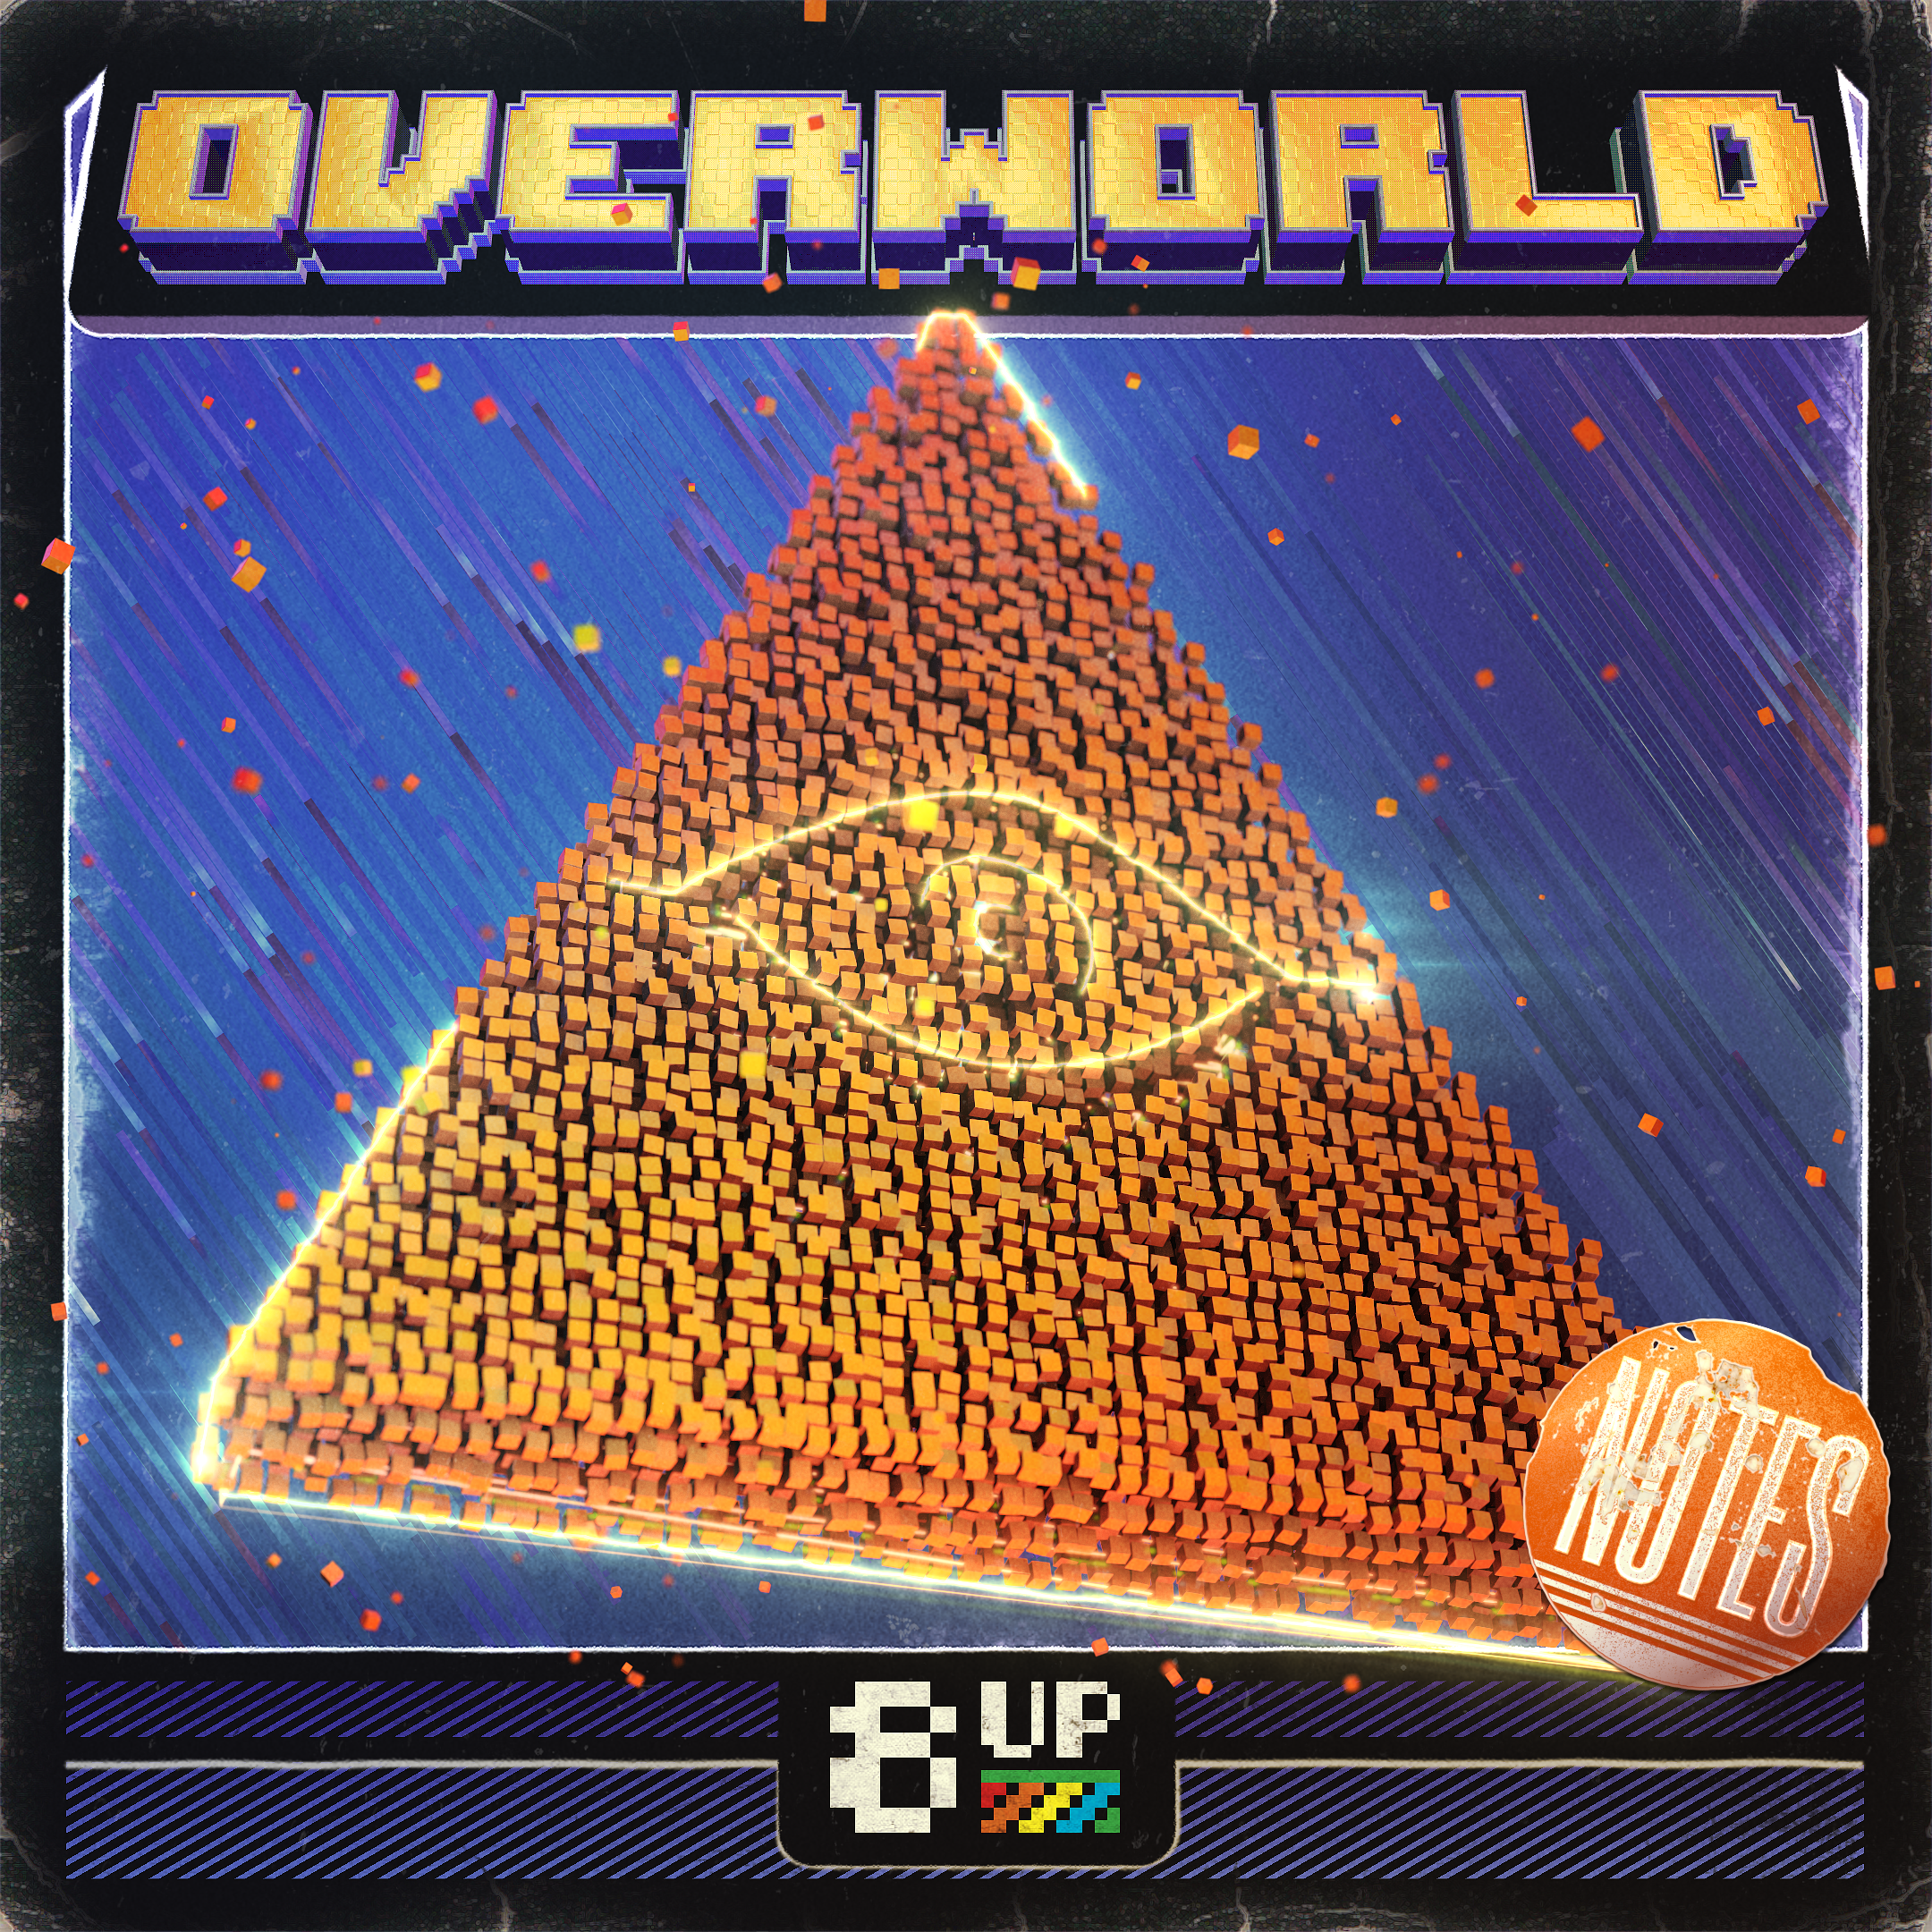 Overworld Notes Packshot by 8UP